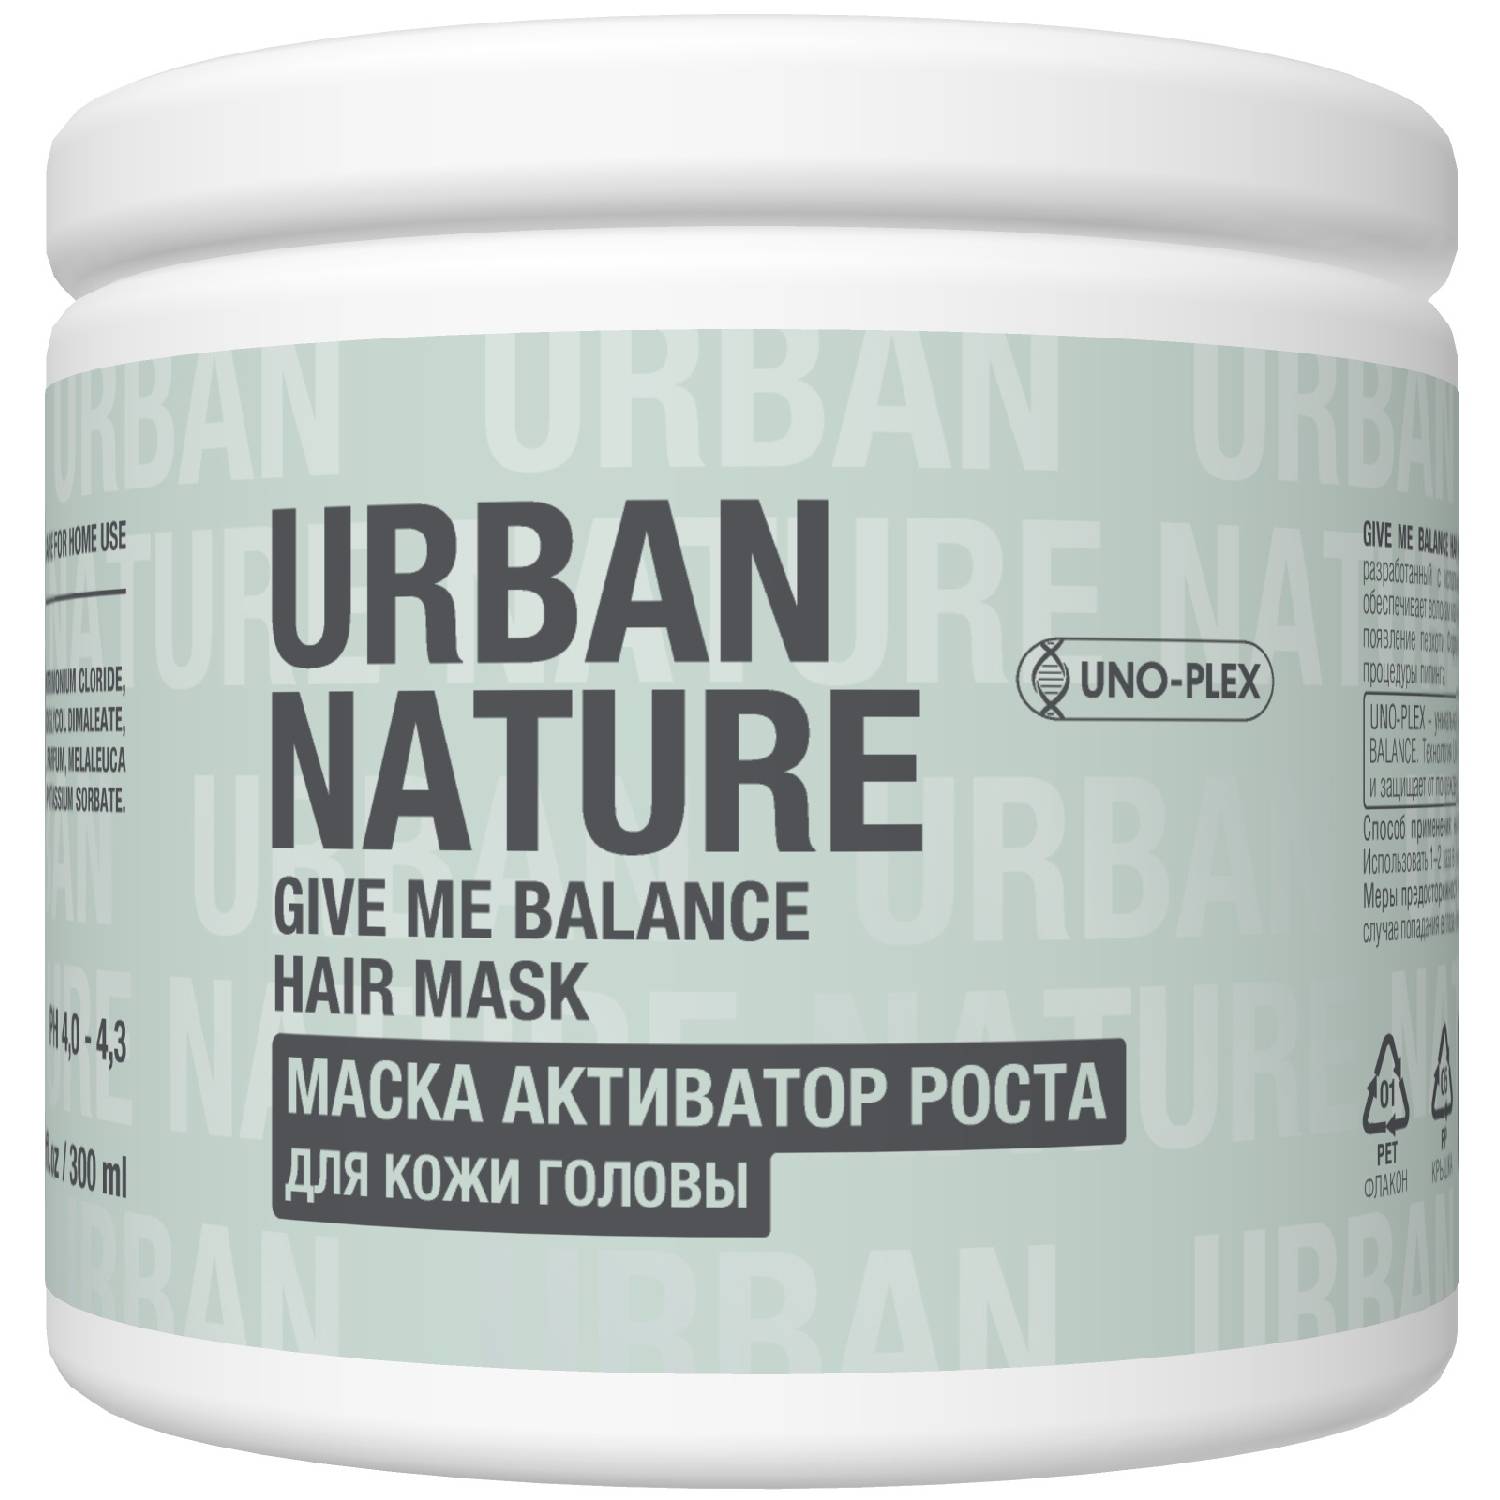 Urban Nature Маска активатор роста для кожи головы, 300 мл (Urban Nature, Give Me Balance)